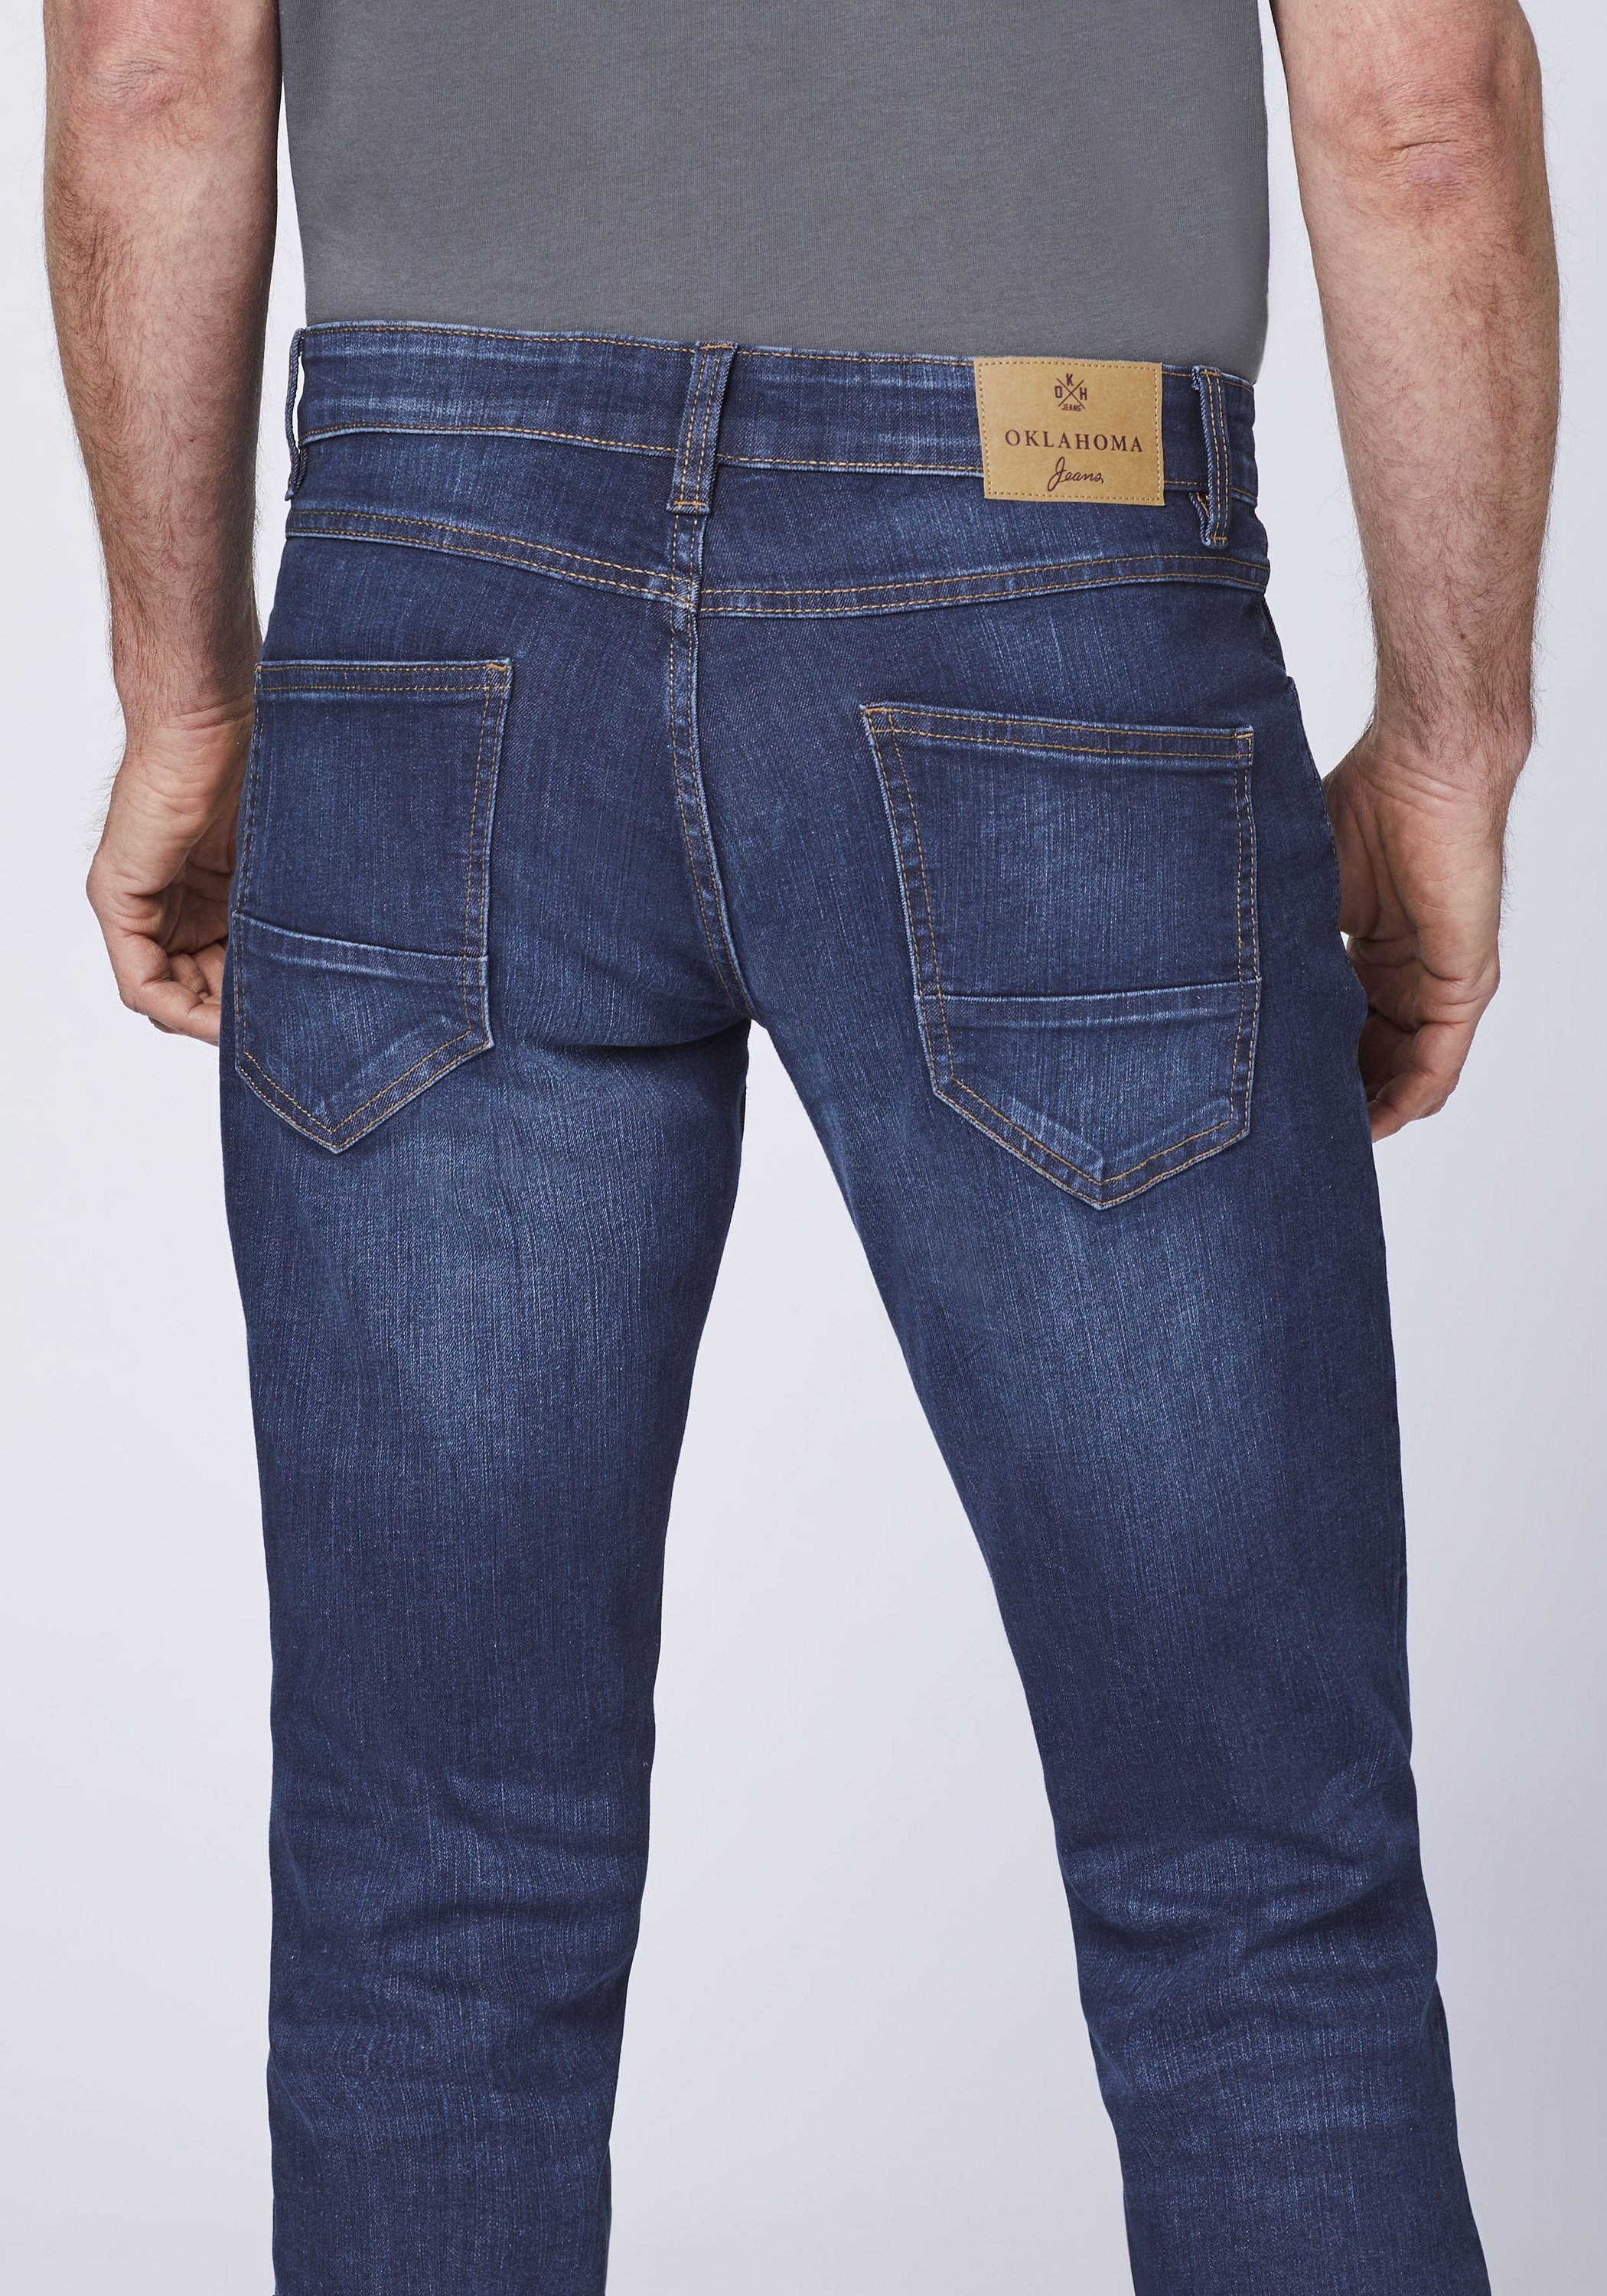 Oklahoma Jeans weichem Denim aus Slim-fit-Jeans